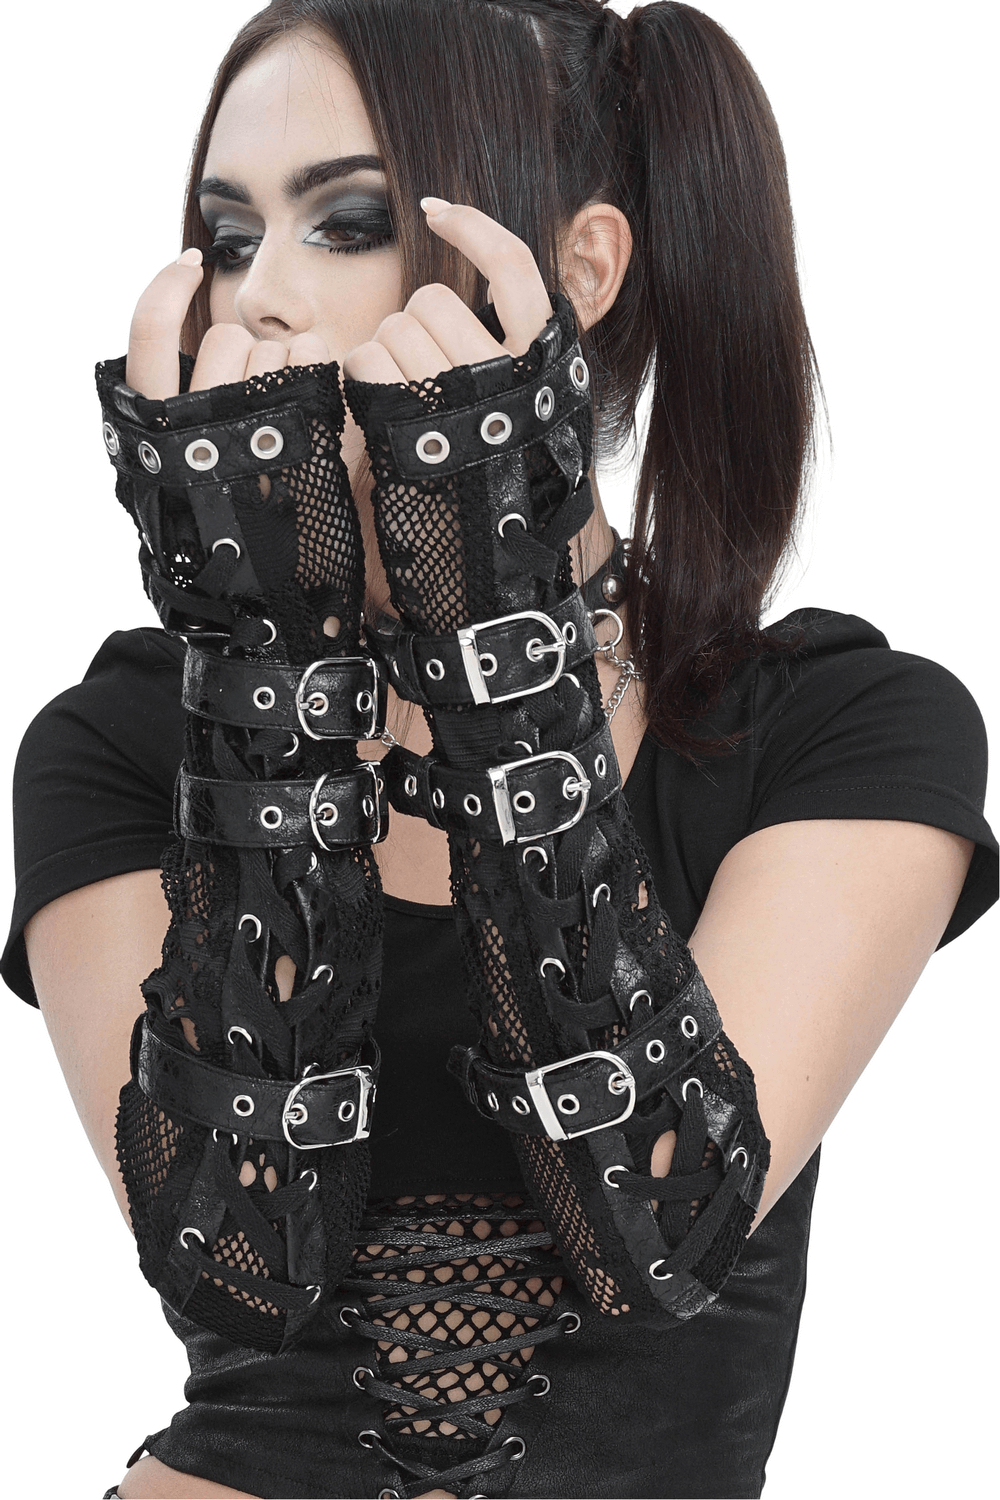 Gothic Black Fishnet Fingerless Gloves with Buckles